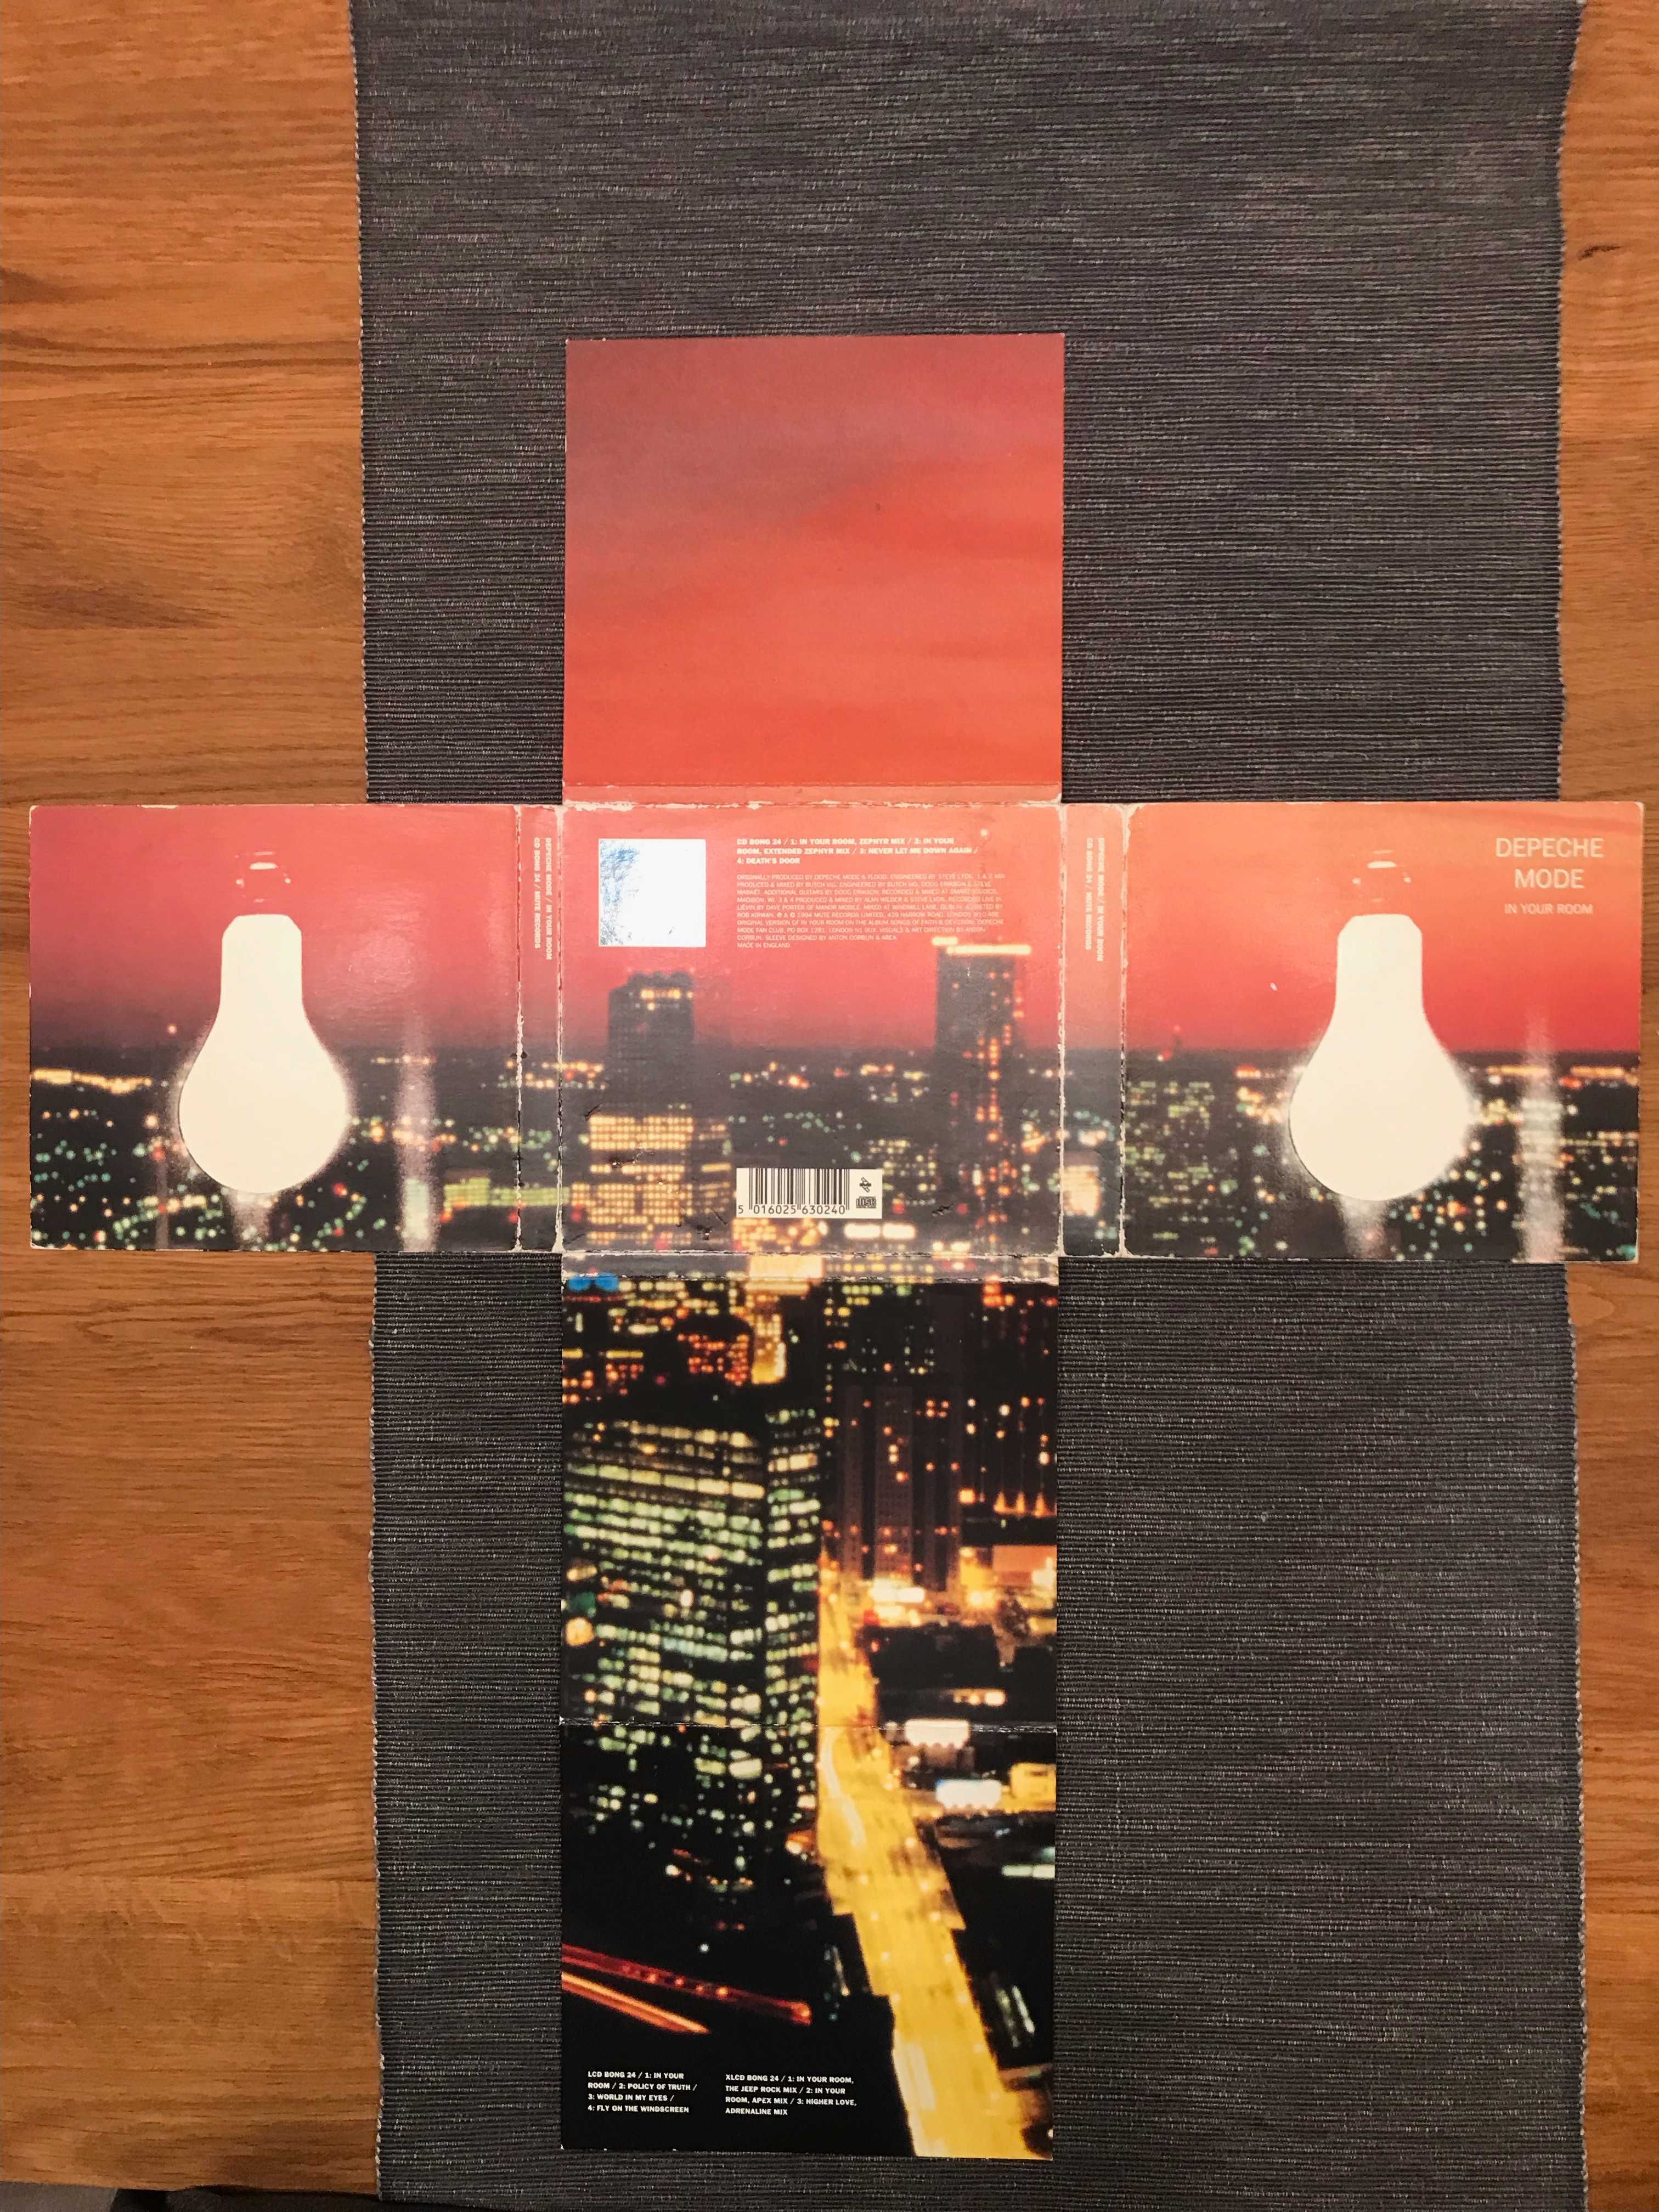 Depeche Mode In Your Room krzyż komplet 3xCD digipack 1994 wydanie UK.